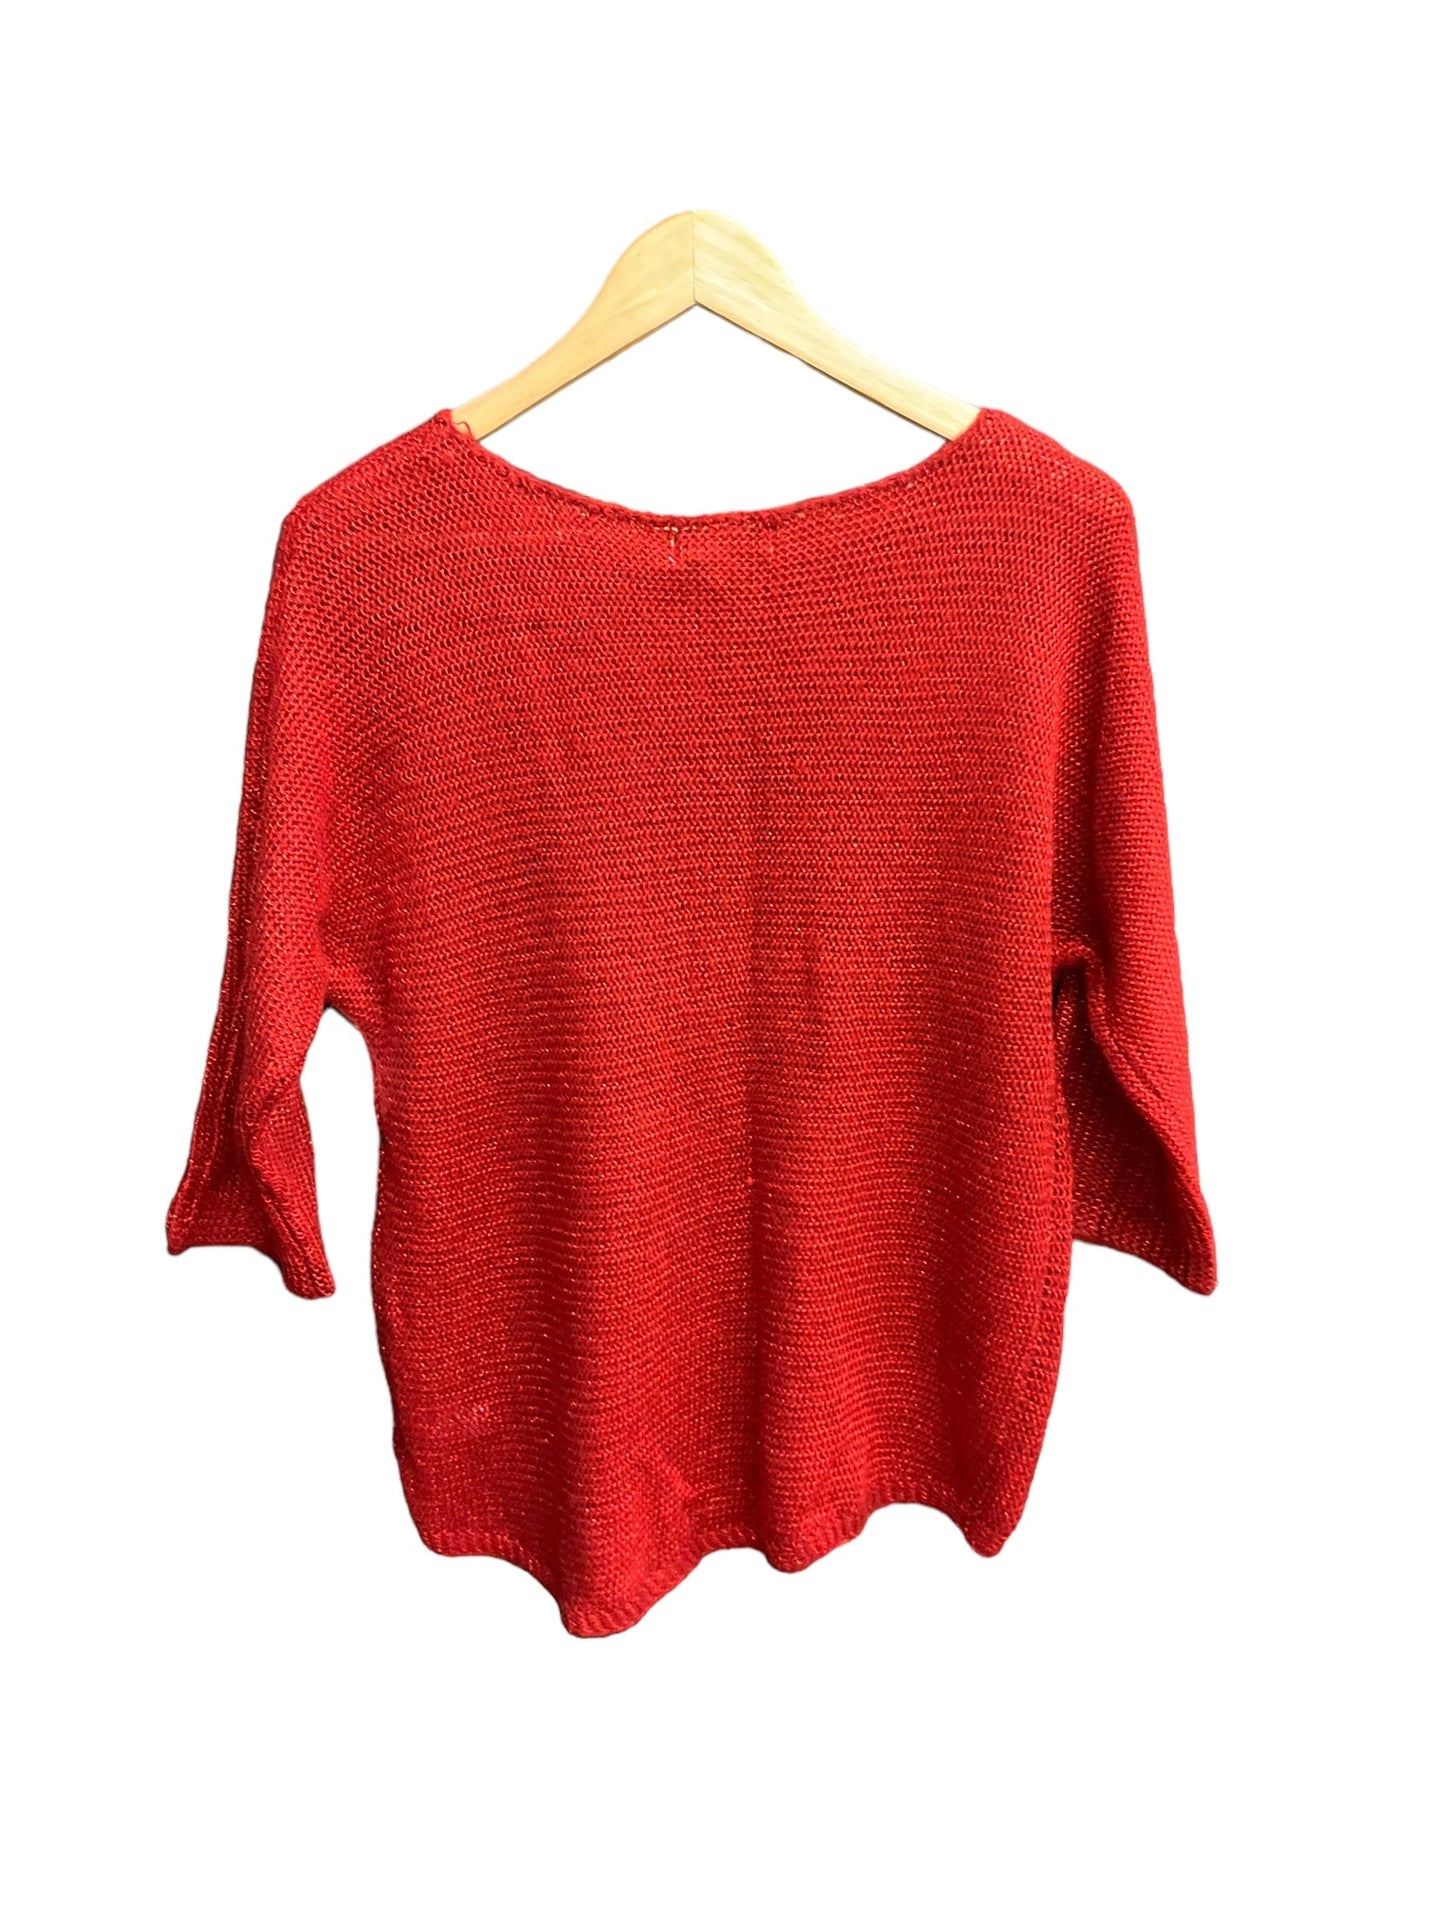 Red Sweater Jennifer Lopez, Size M